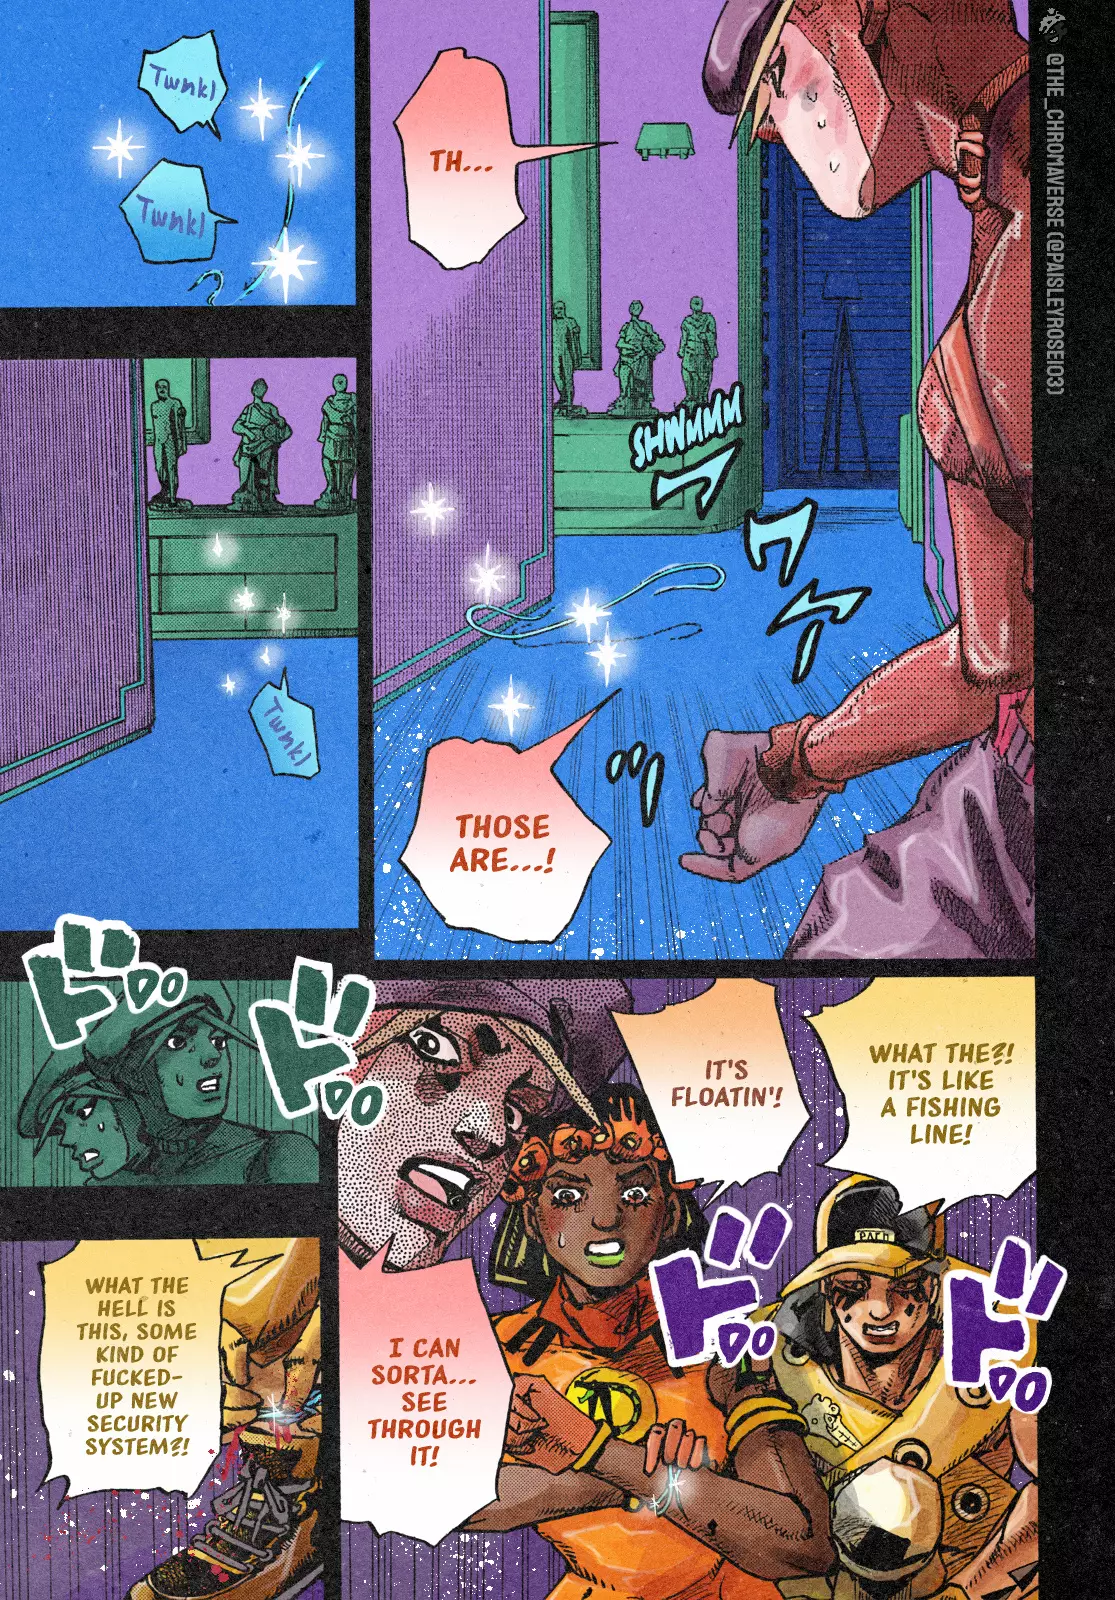 Jojo's Bizarre Adventure Part 9 - The Jojolands (Fan-Colored) - 3 page 37-92af879f